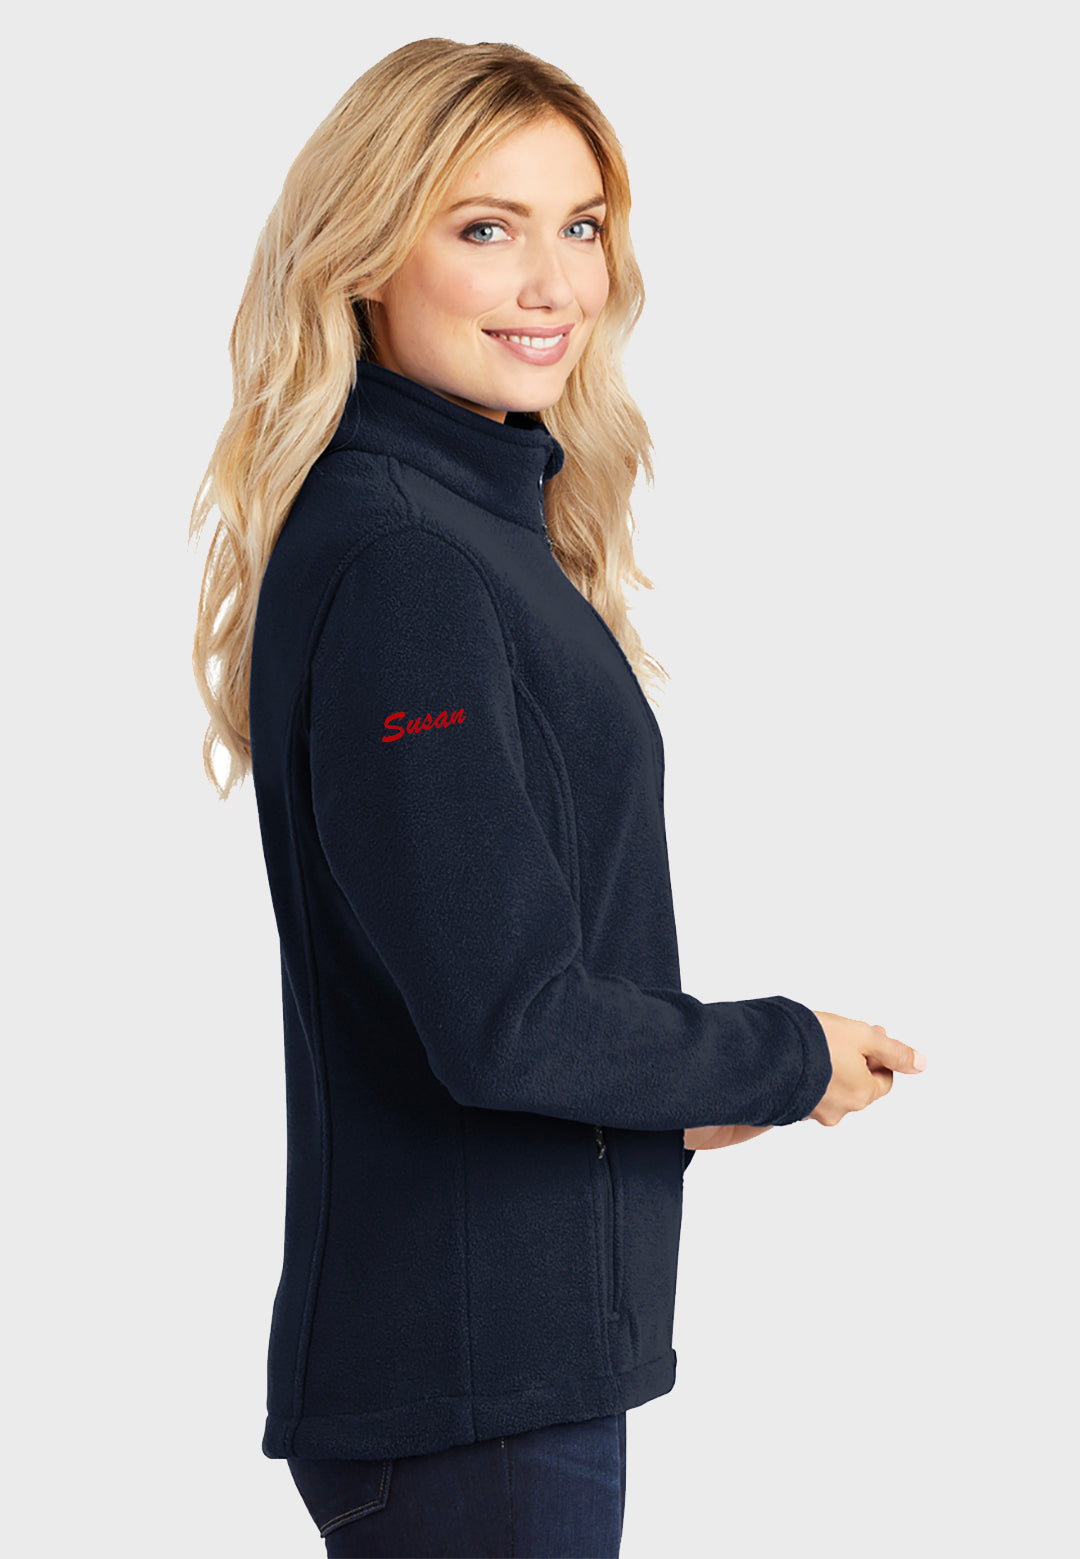 Featherdown Port Authority® Ladies Fleece Jacket - 2 Color Options